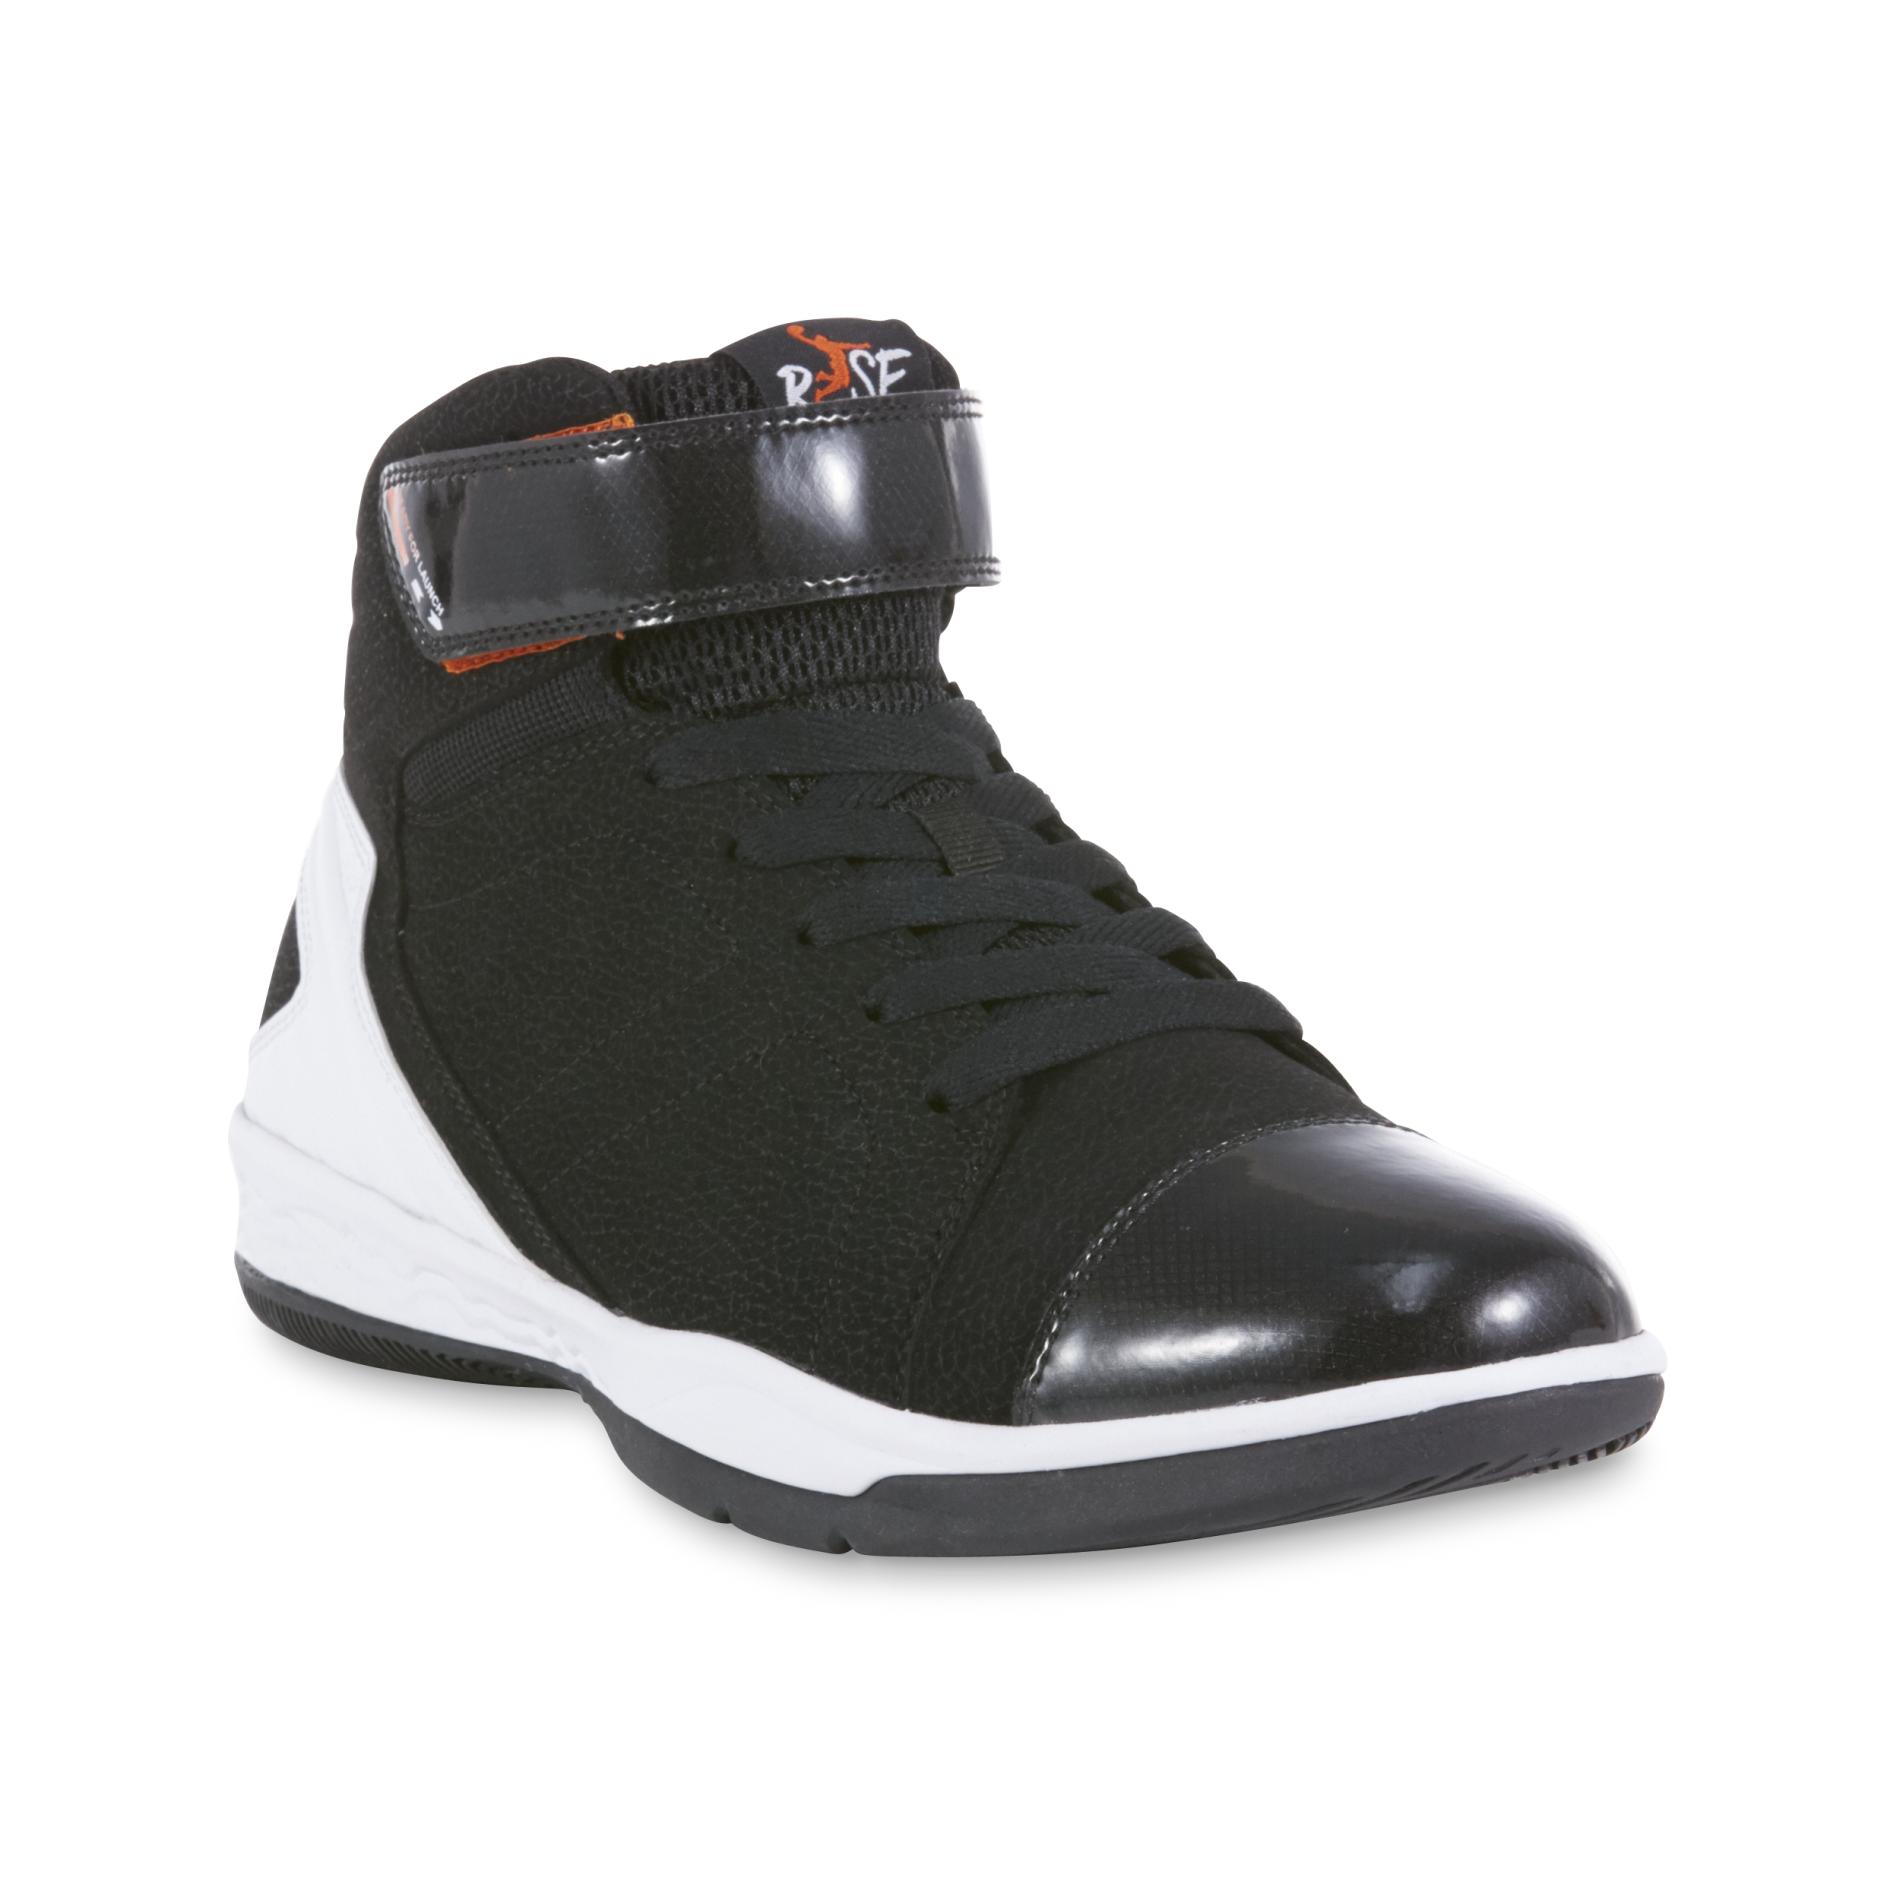 Risewear Men's Glide High Top Shoe - Black/White